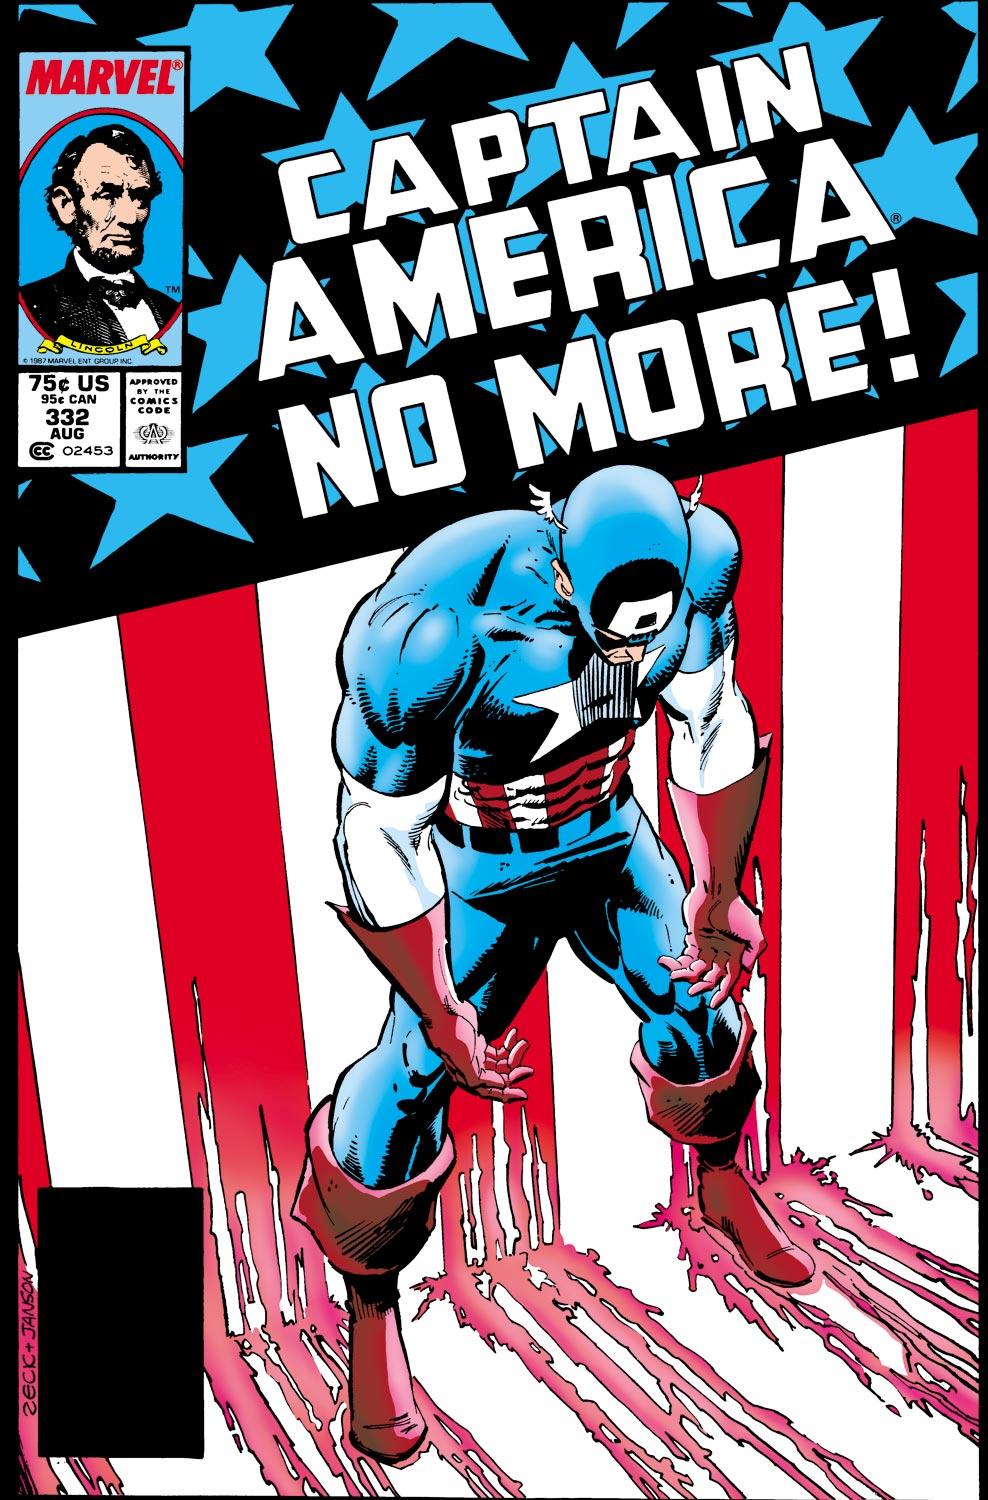 Captain America (1968-1996) #402 by Mark Gruenwald